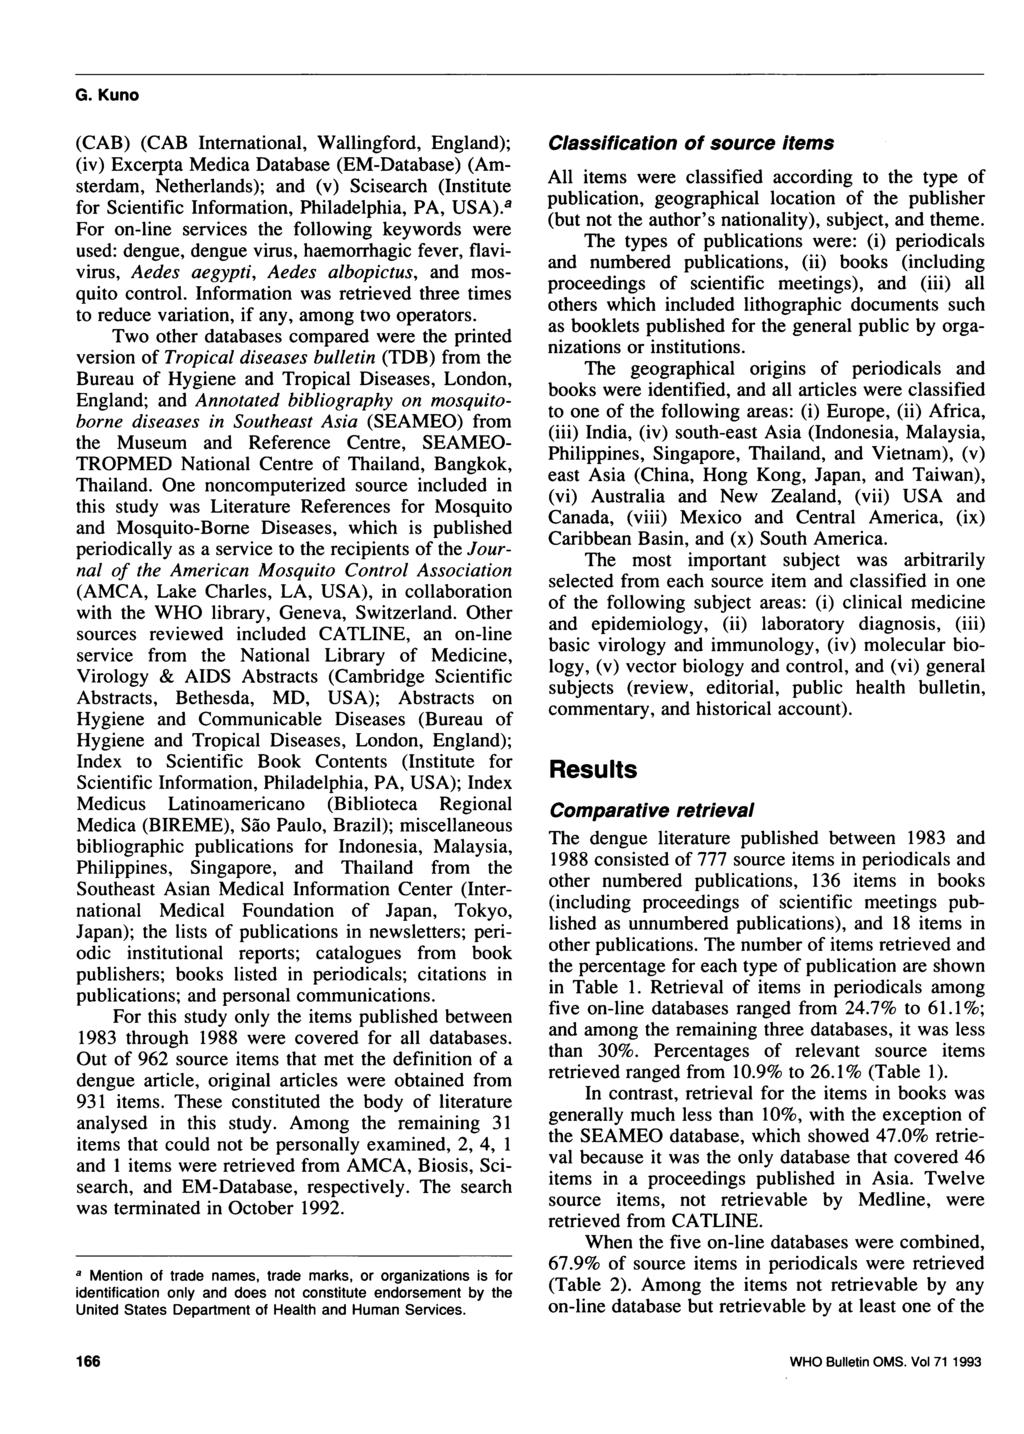 G. Kuno (CAB) (CAB Interntionl, Wllingford, Englnd); (iv) Excerpt Medic Dtbse (EM-Dtbse) (Amsterdm, Netherlnds); nd (v) Sciserch (Institute for Scientific Informtion, Phildelphi, PA, USA).